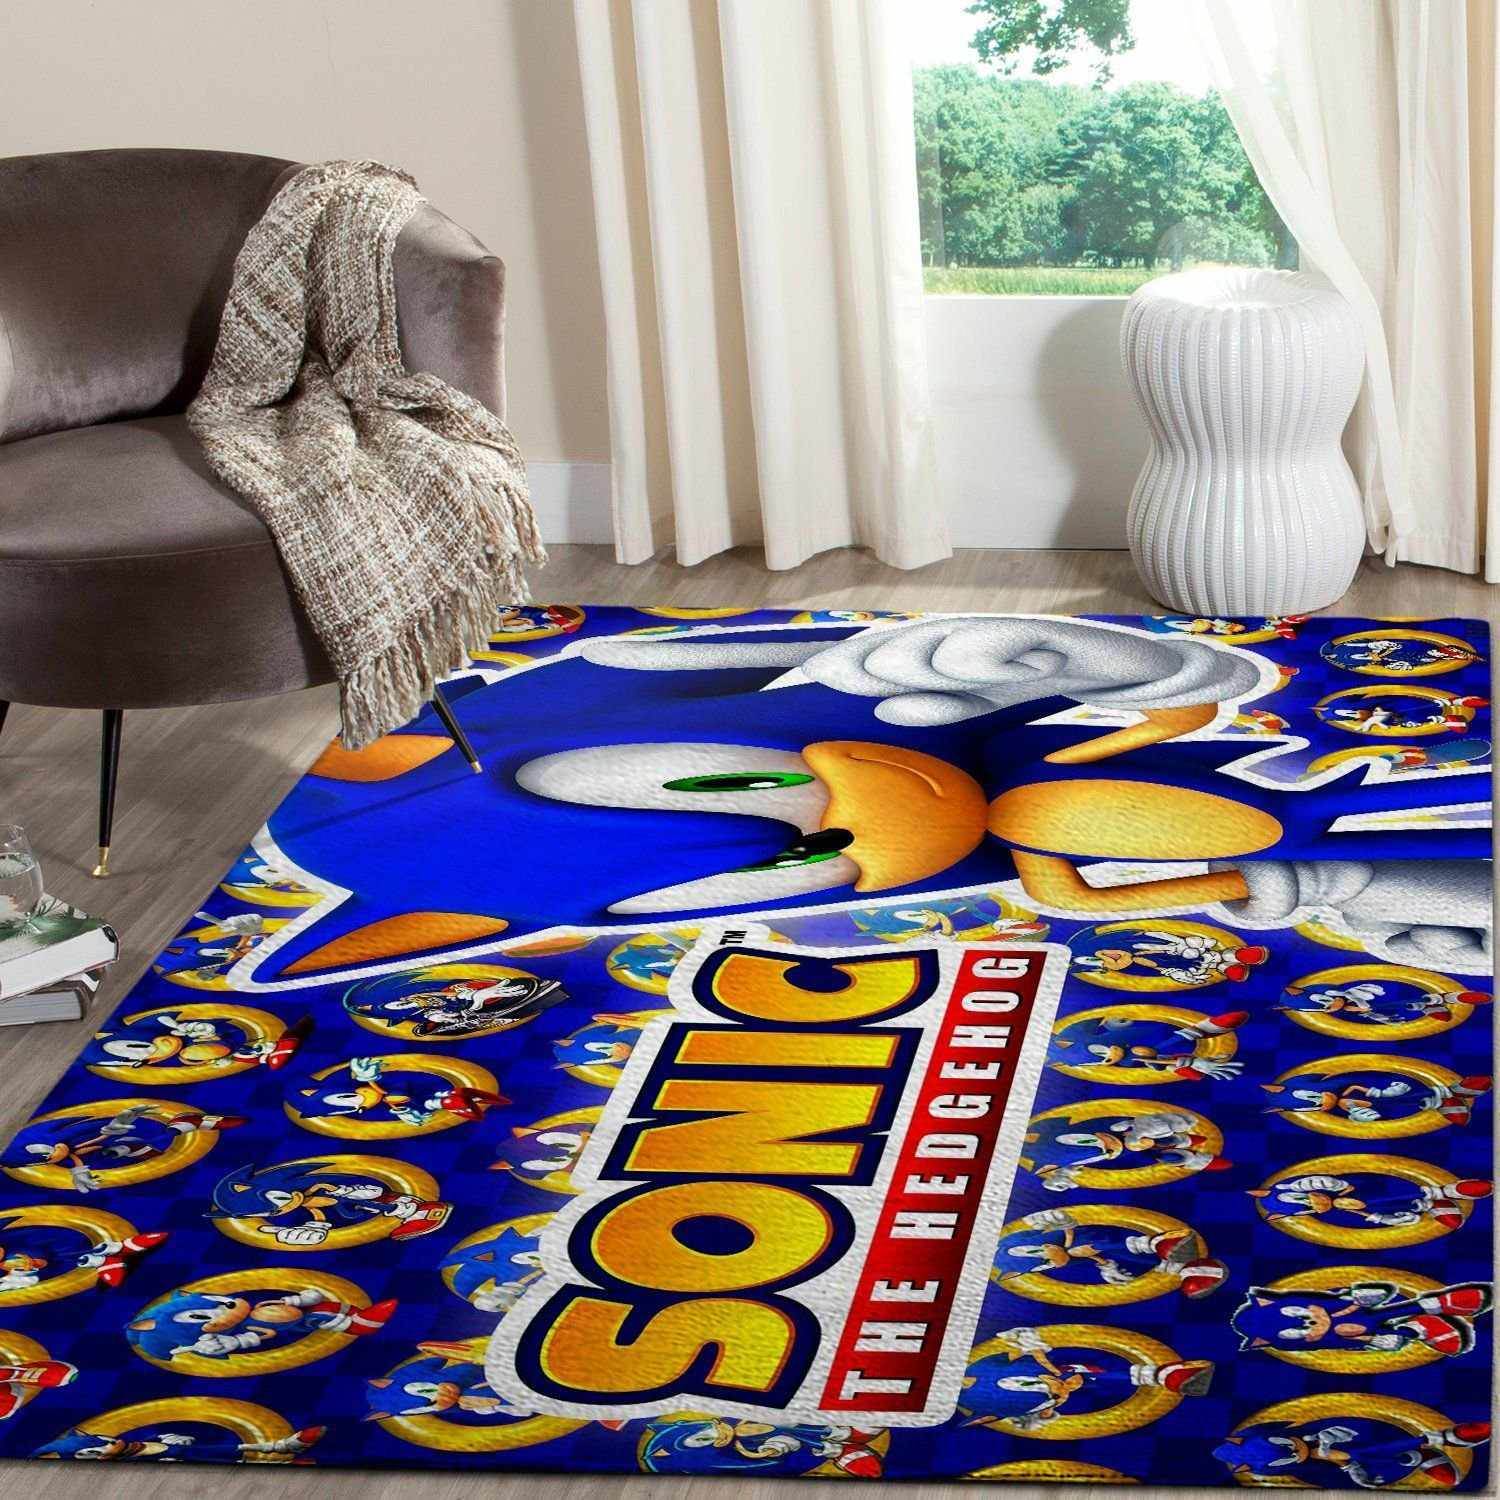 Sonic The Hedgehog Area Rug